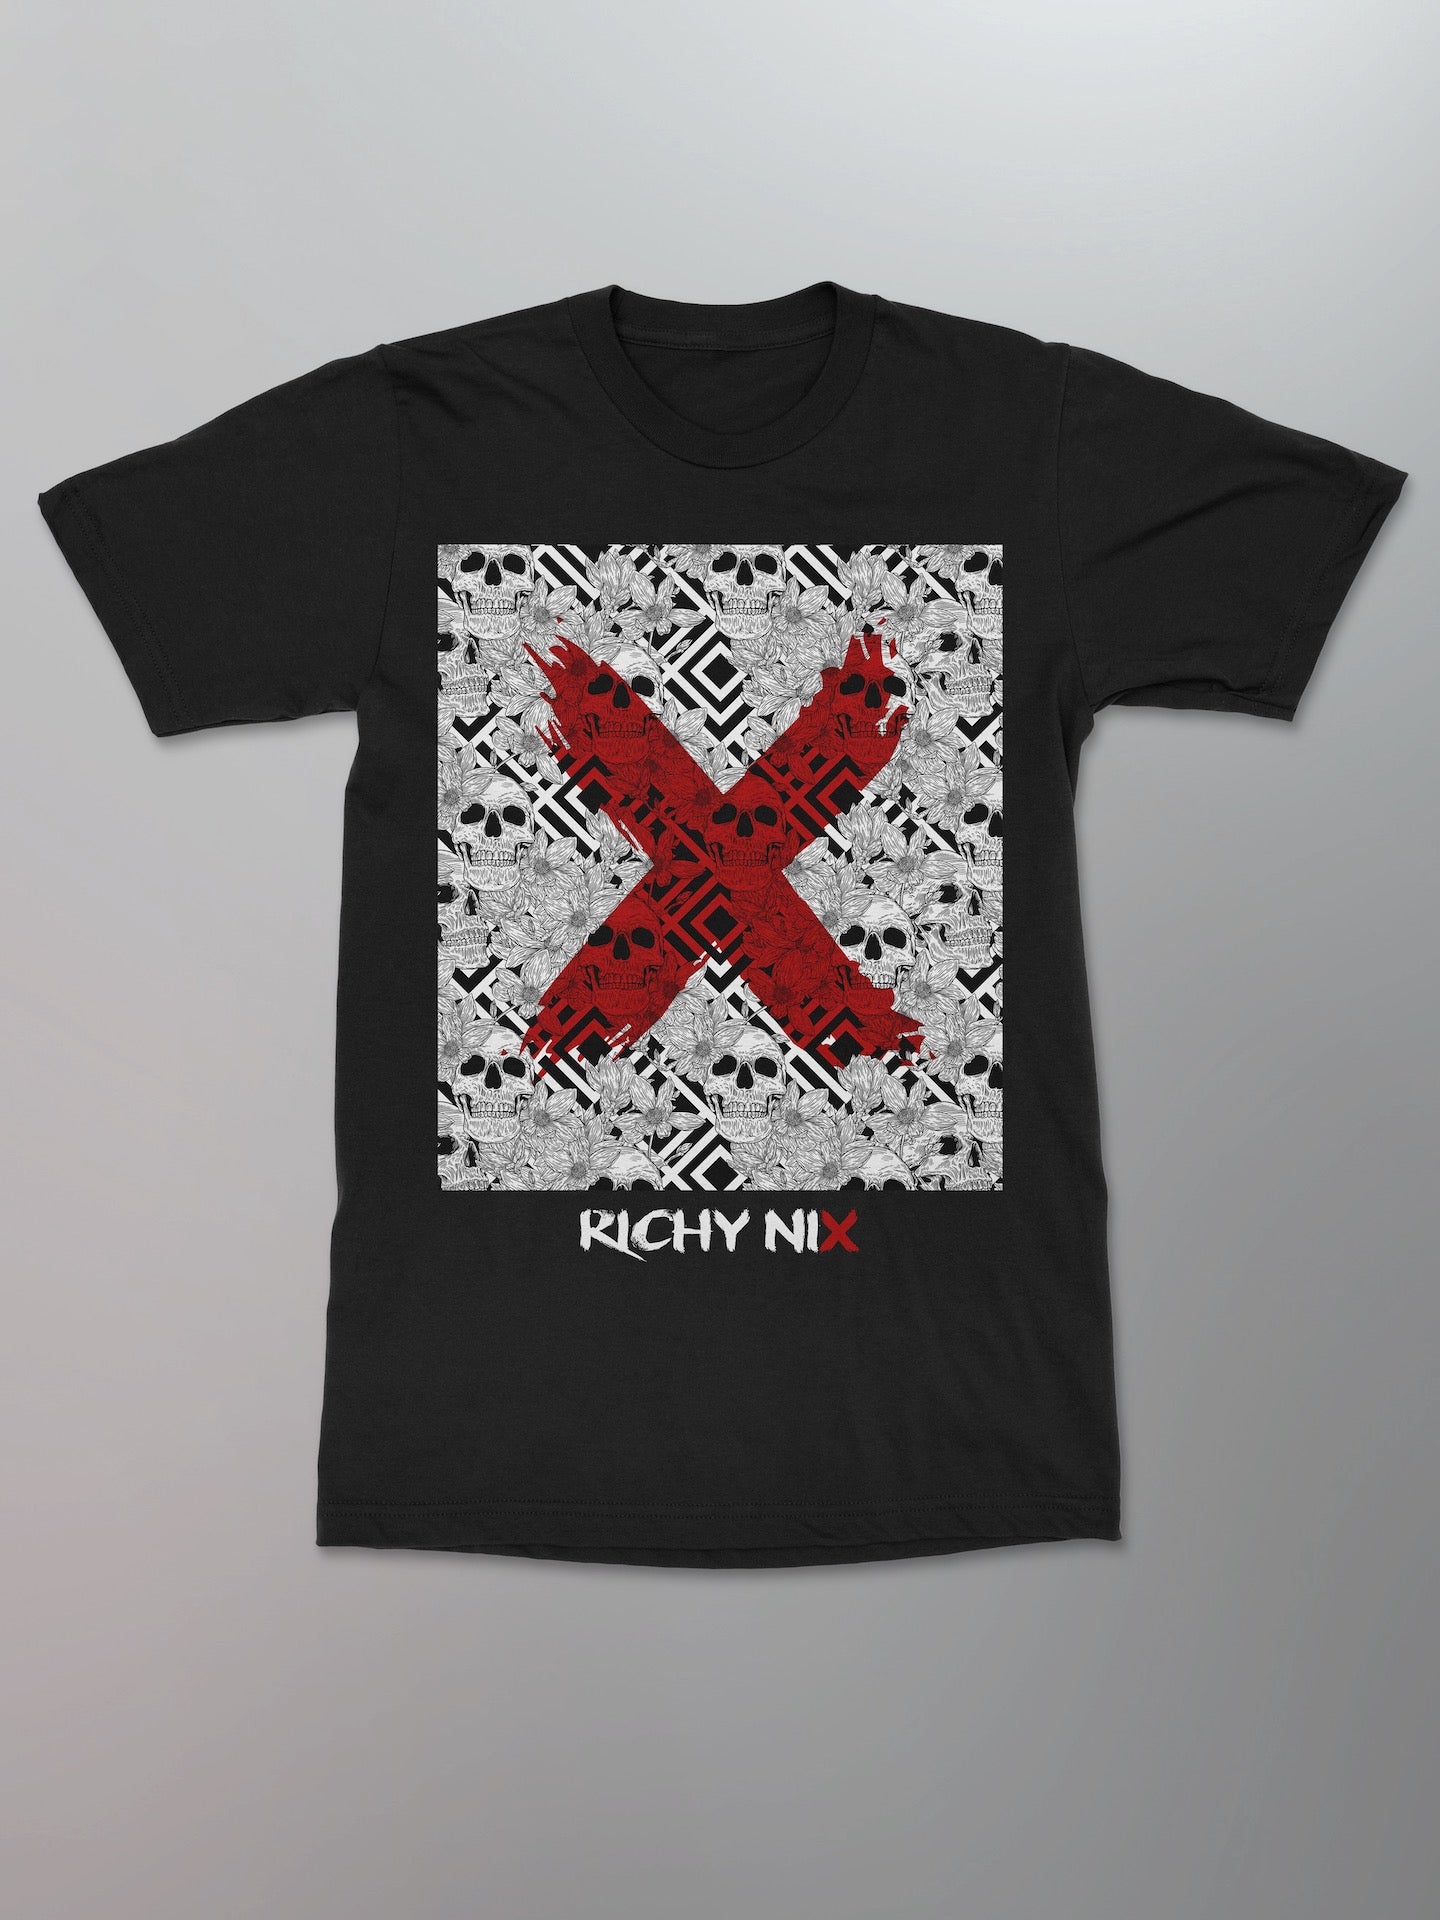 Richy Nix - False Pride Shirt